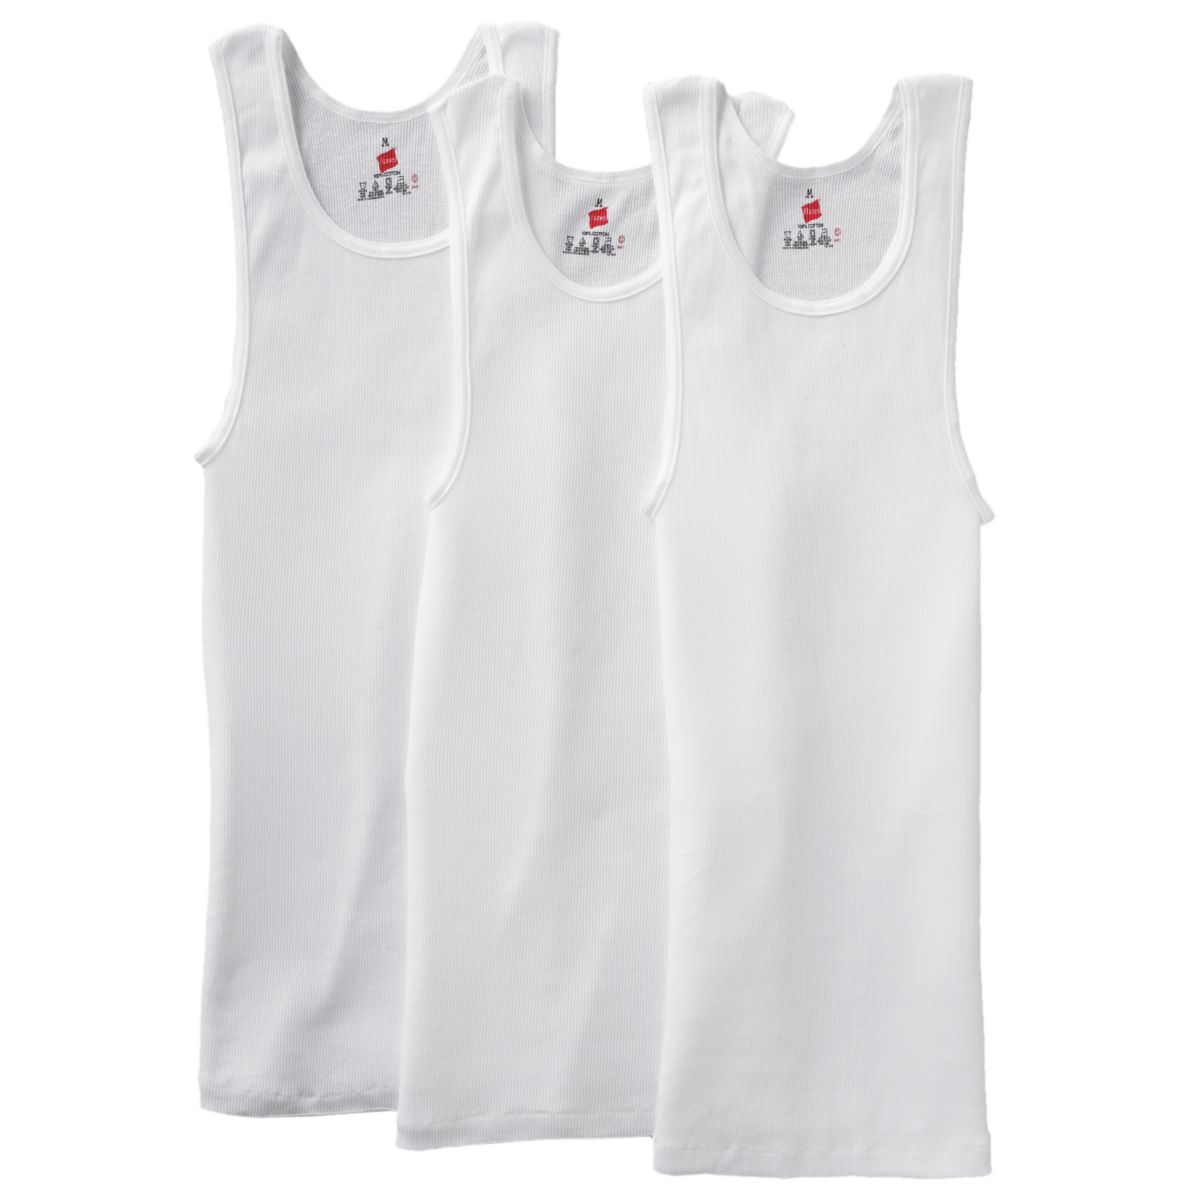 Big & Tall Hanes Ultimate®, 3 пары футболок Fresh IQ Hanes